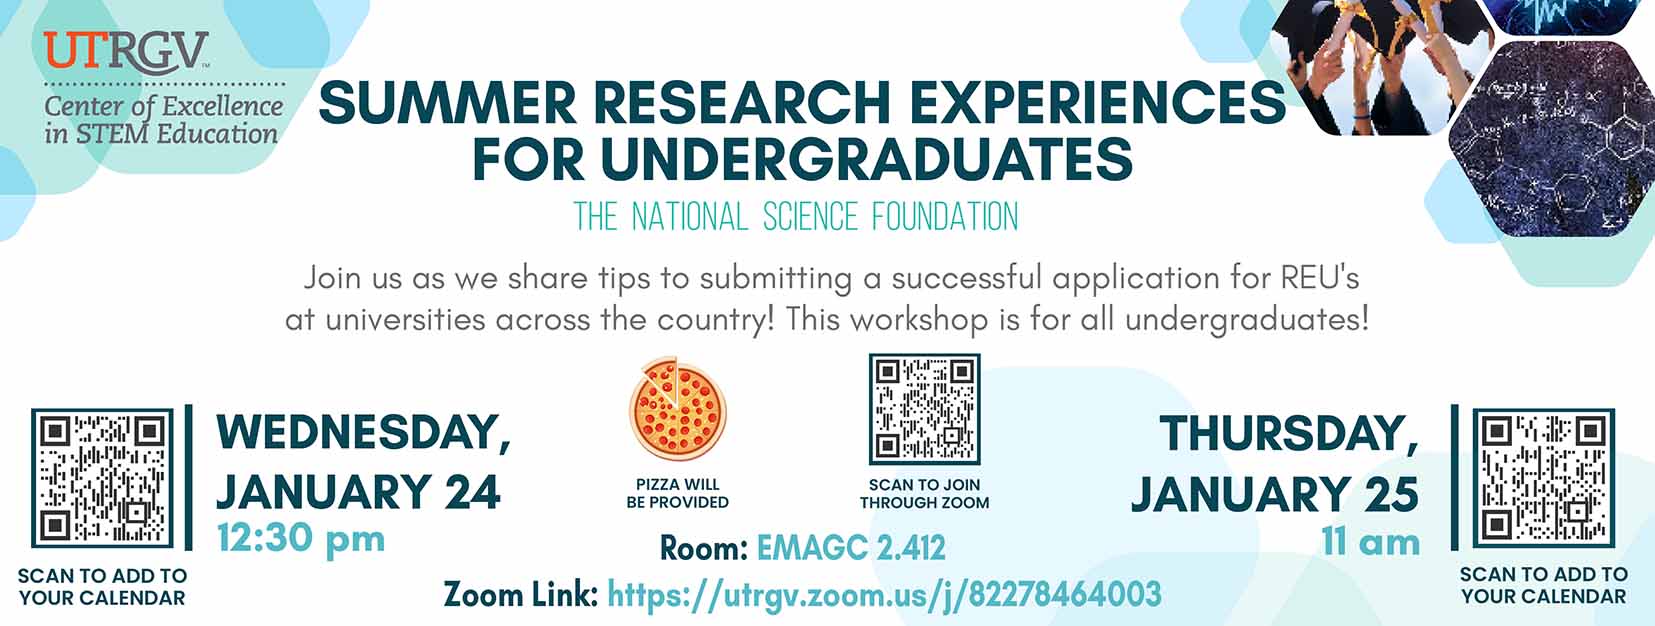 Summer Research Experiences for Undergraduates